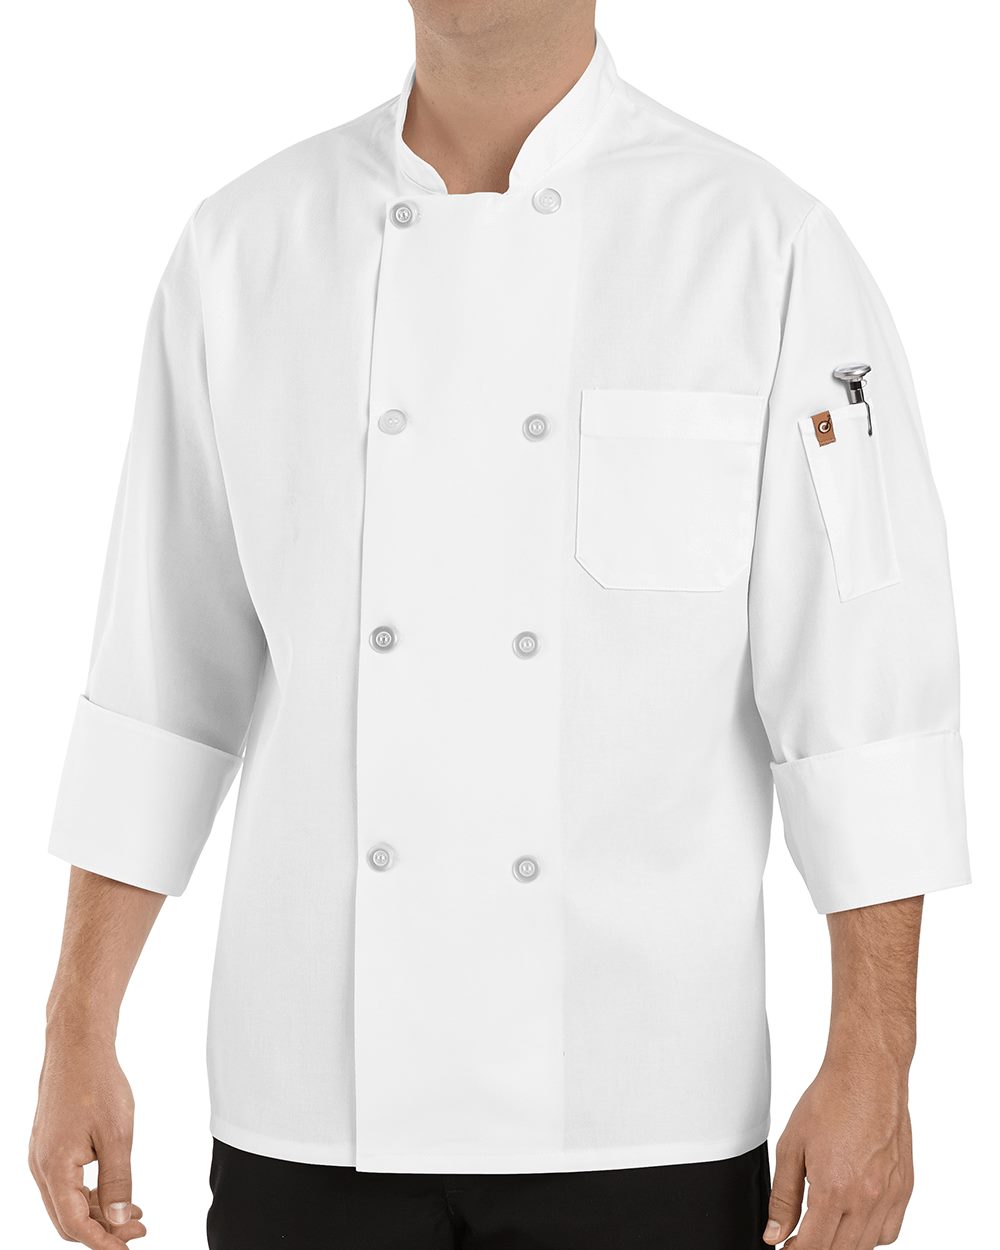 Chef shirt white bus boy military style Kitchen over jacket 2x 3x  EWC NEW 